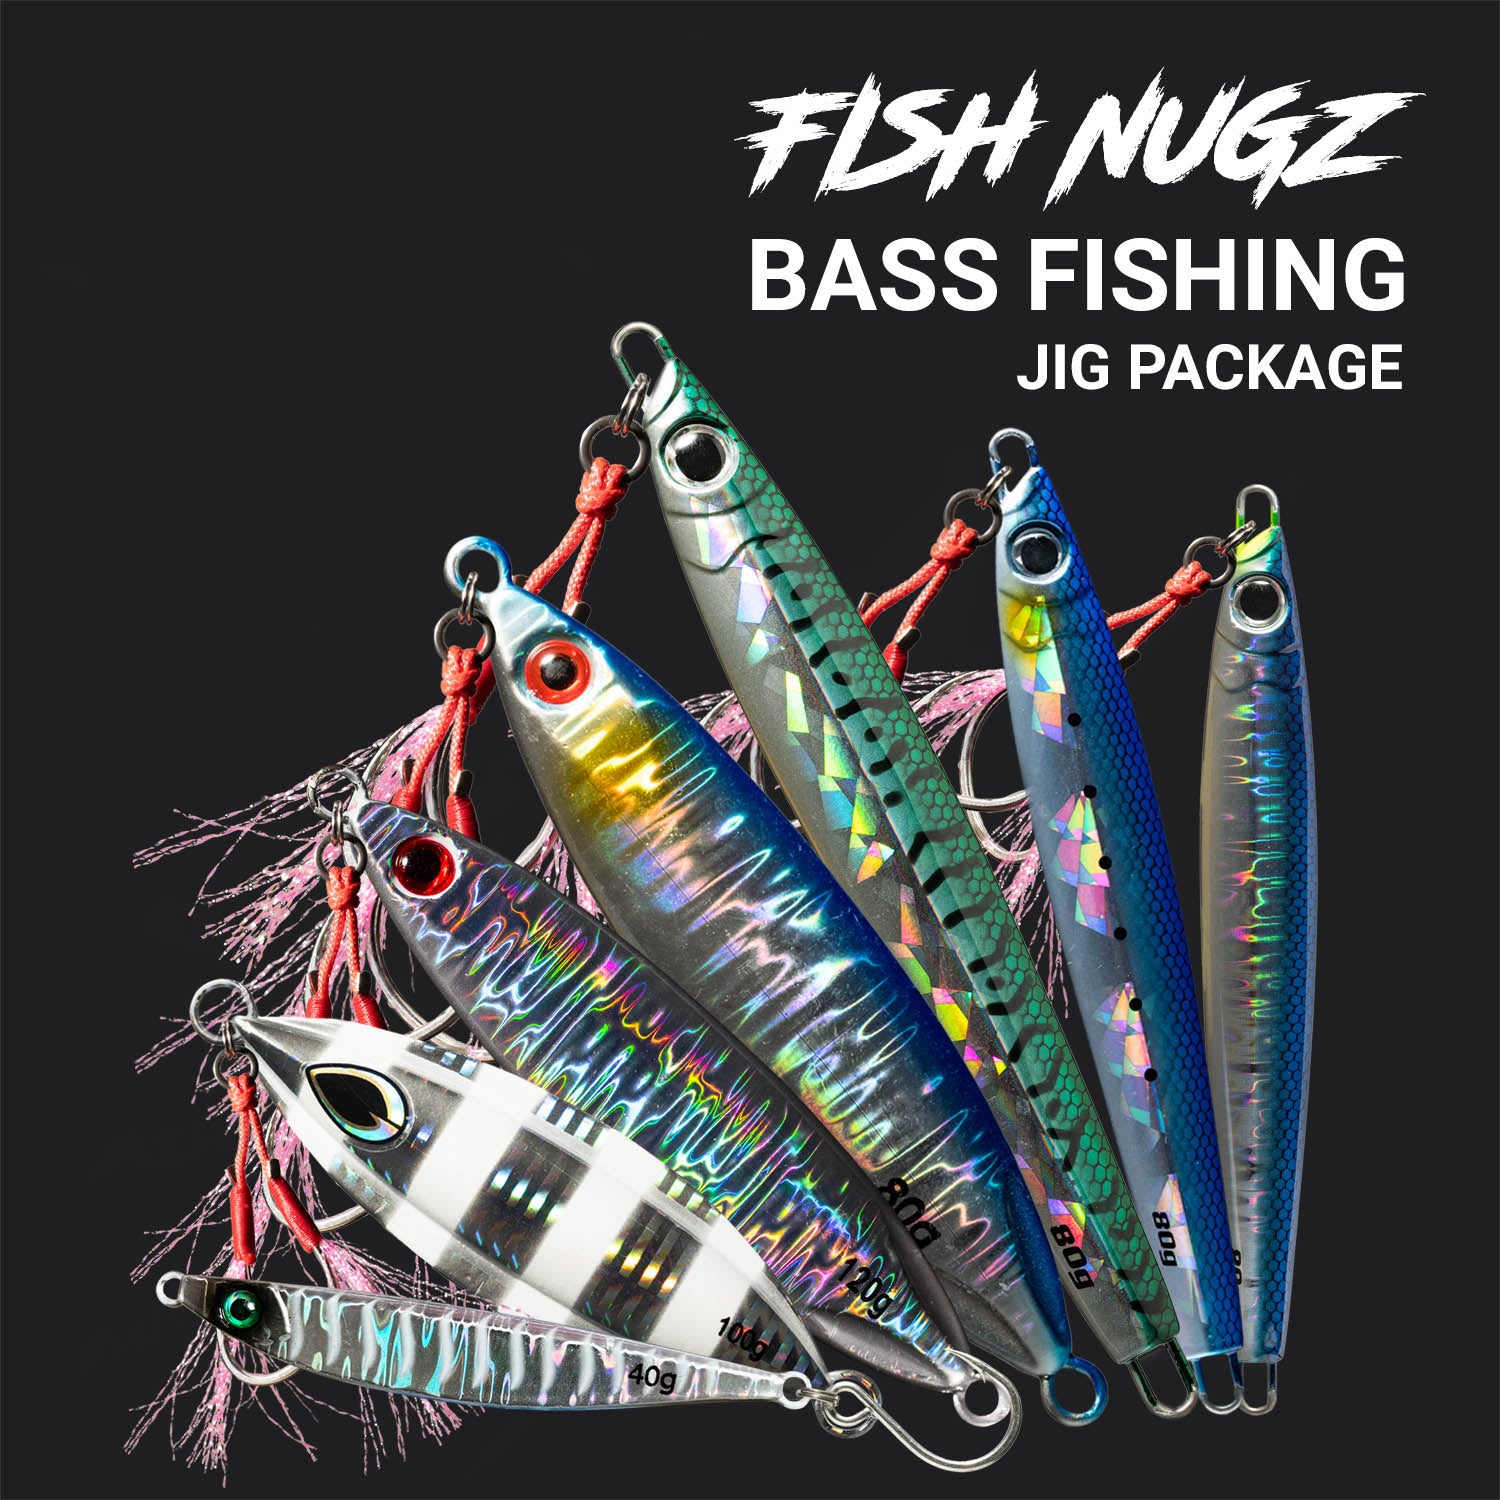 Fish Nugz Bass Fishing Jig Package - Start Catching Bass On Jigs